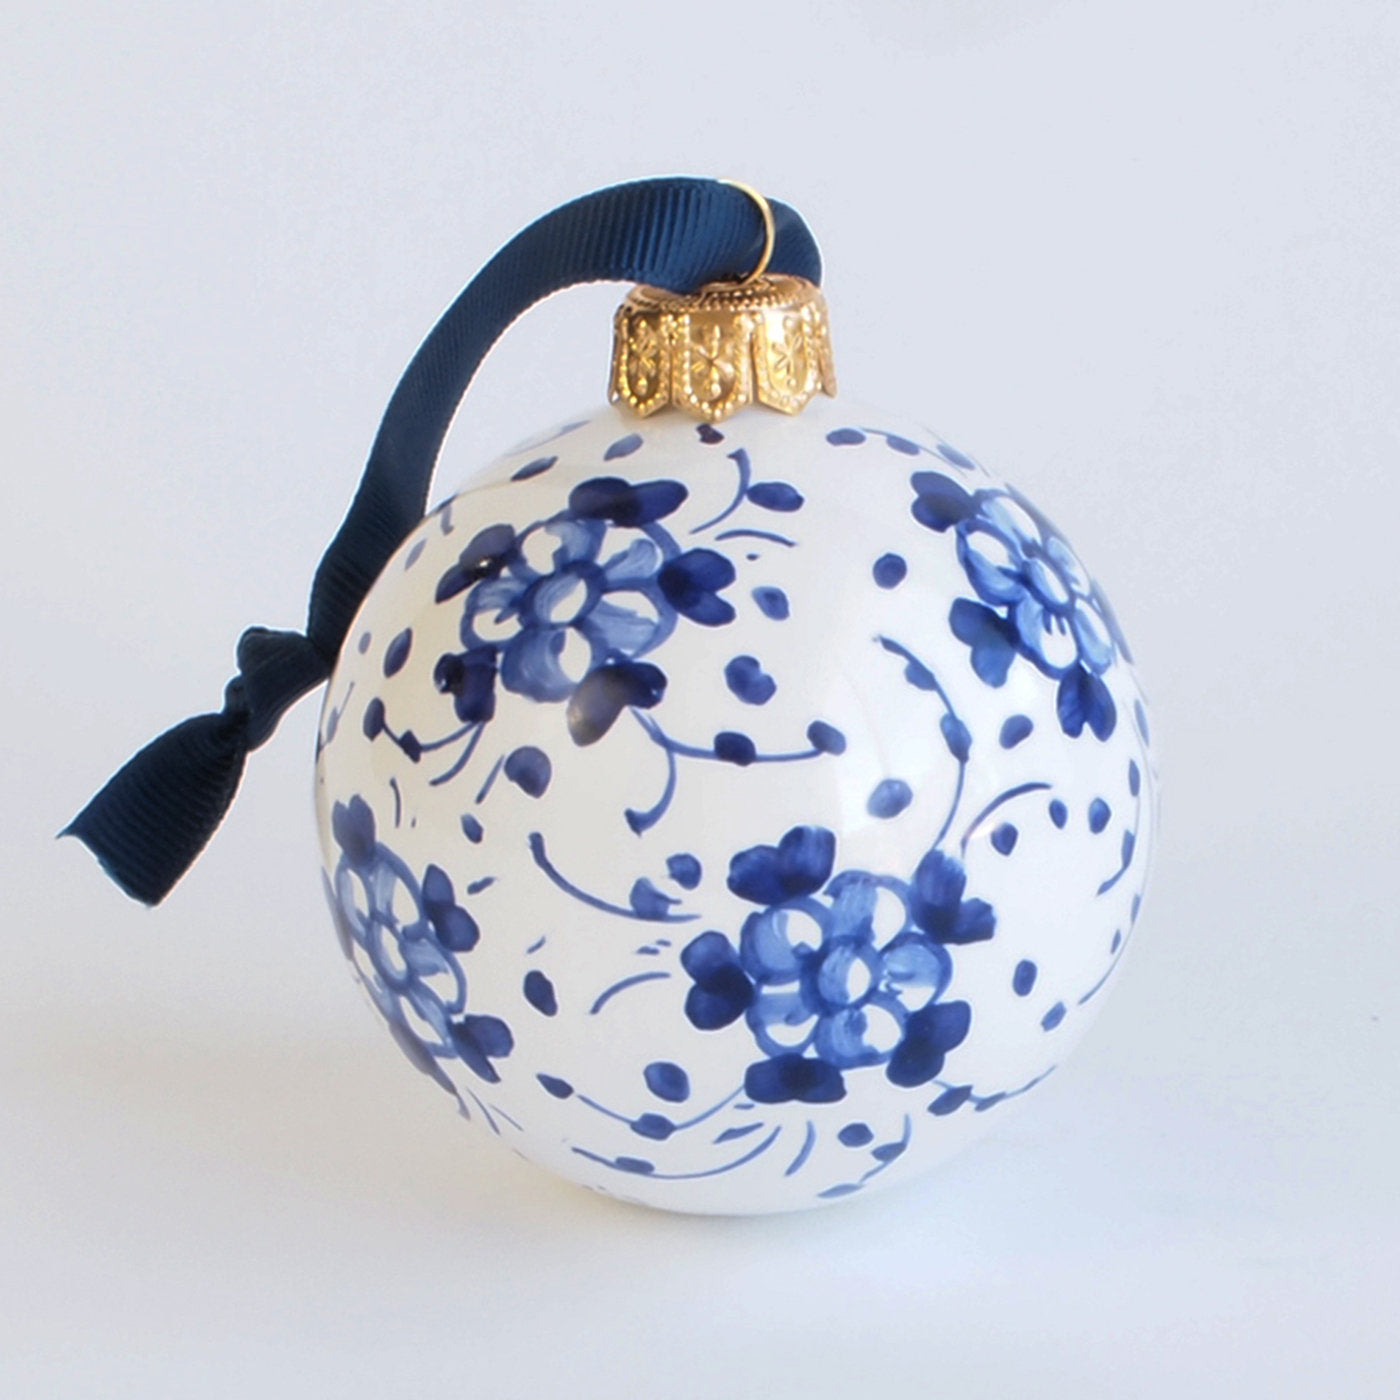 Blue Floral Christmas Ball Ornament #1 - Alternative view 1